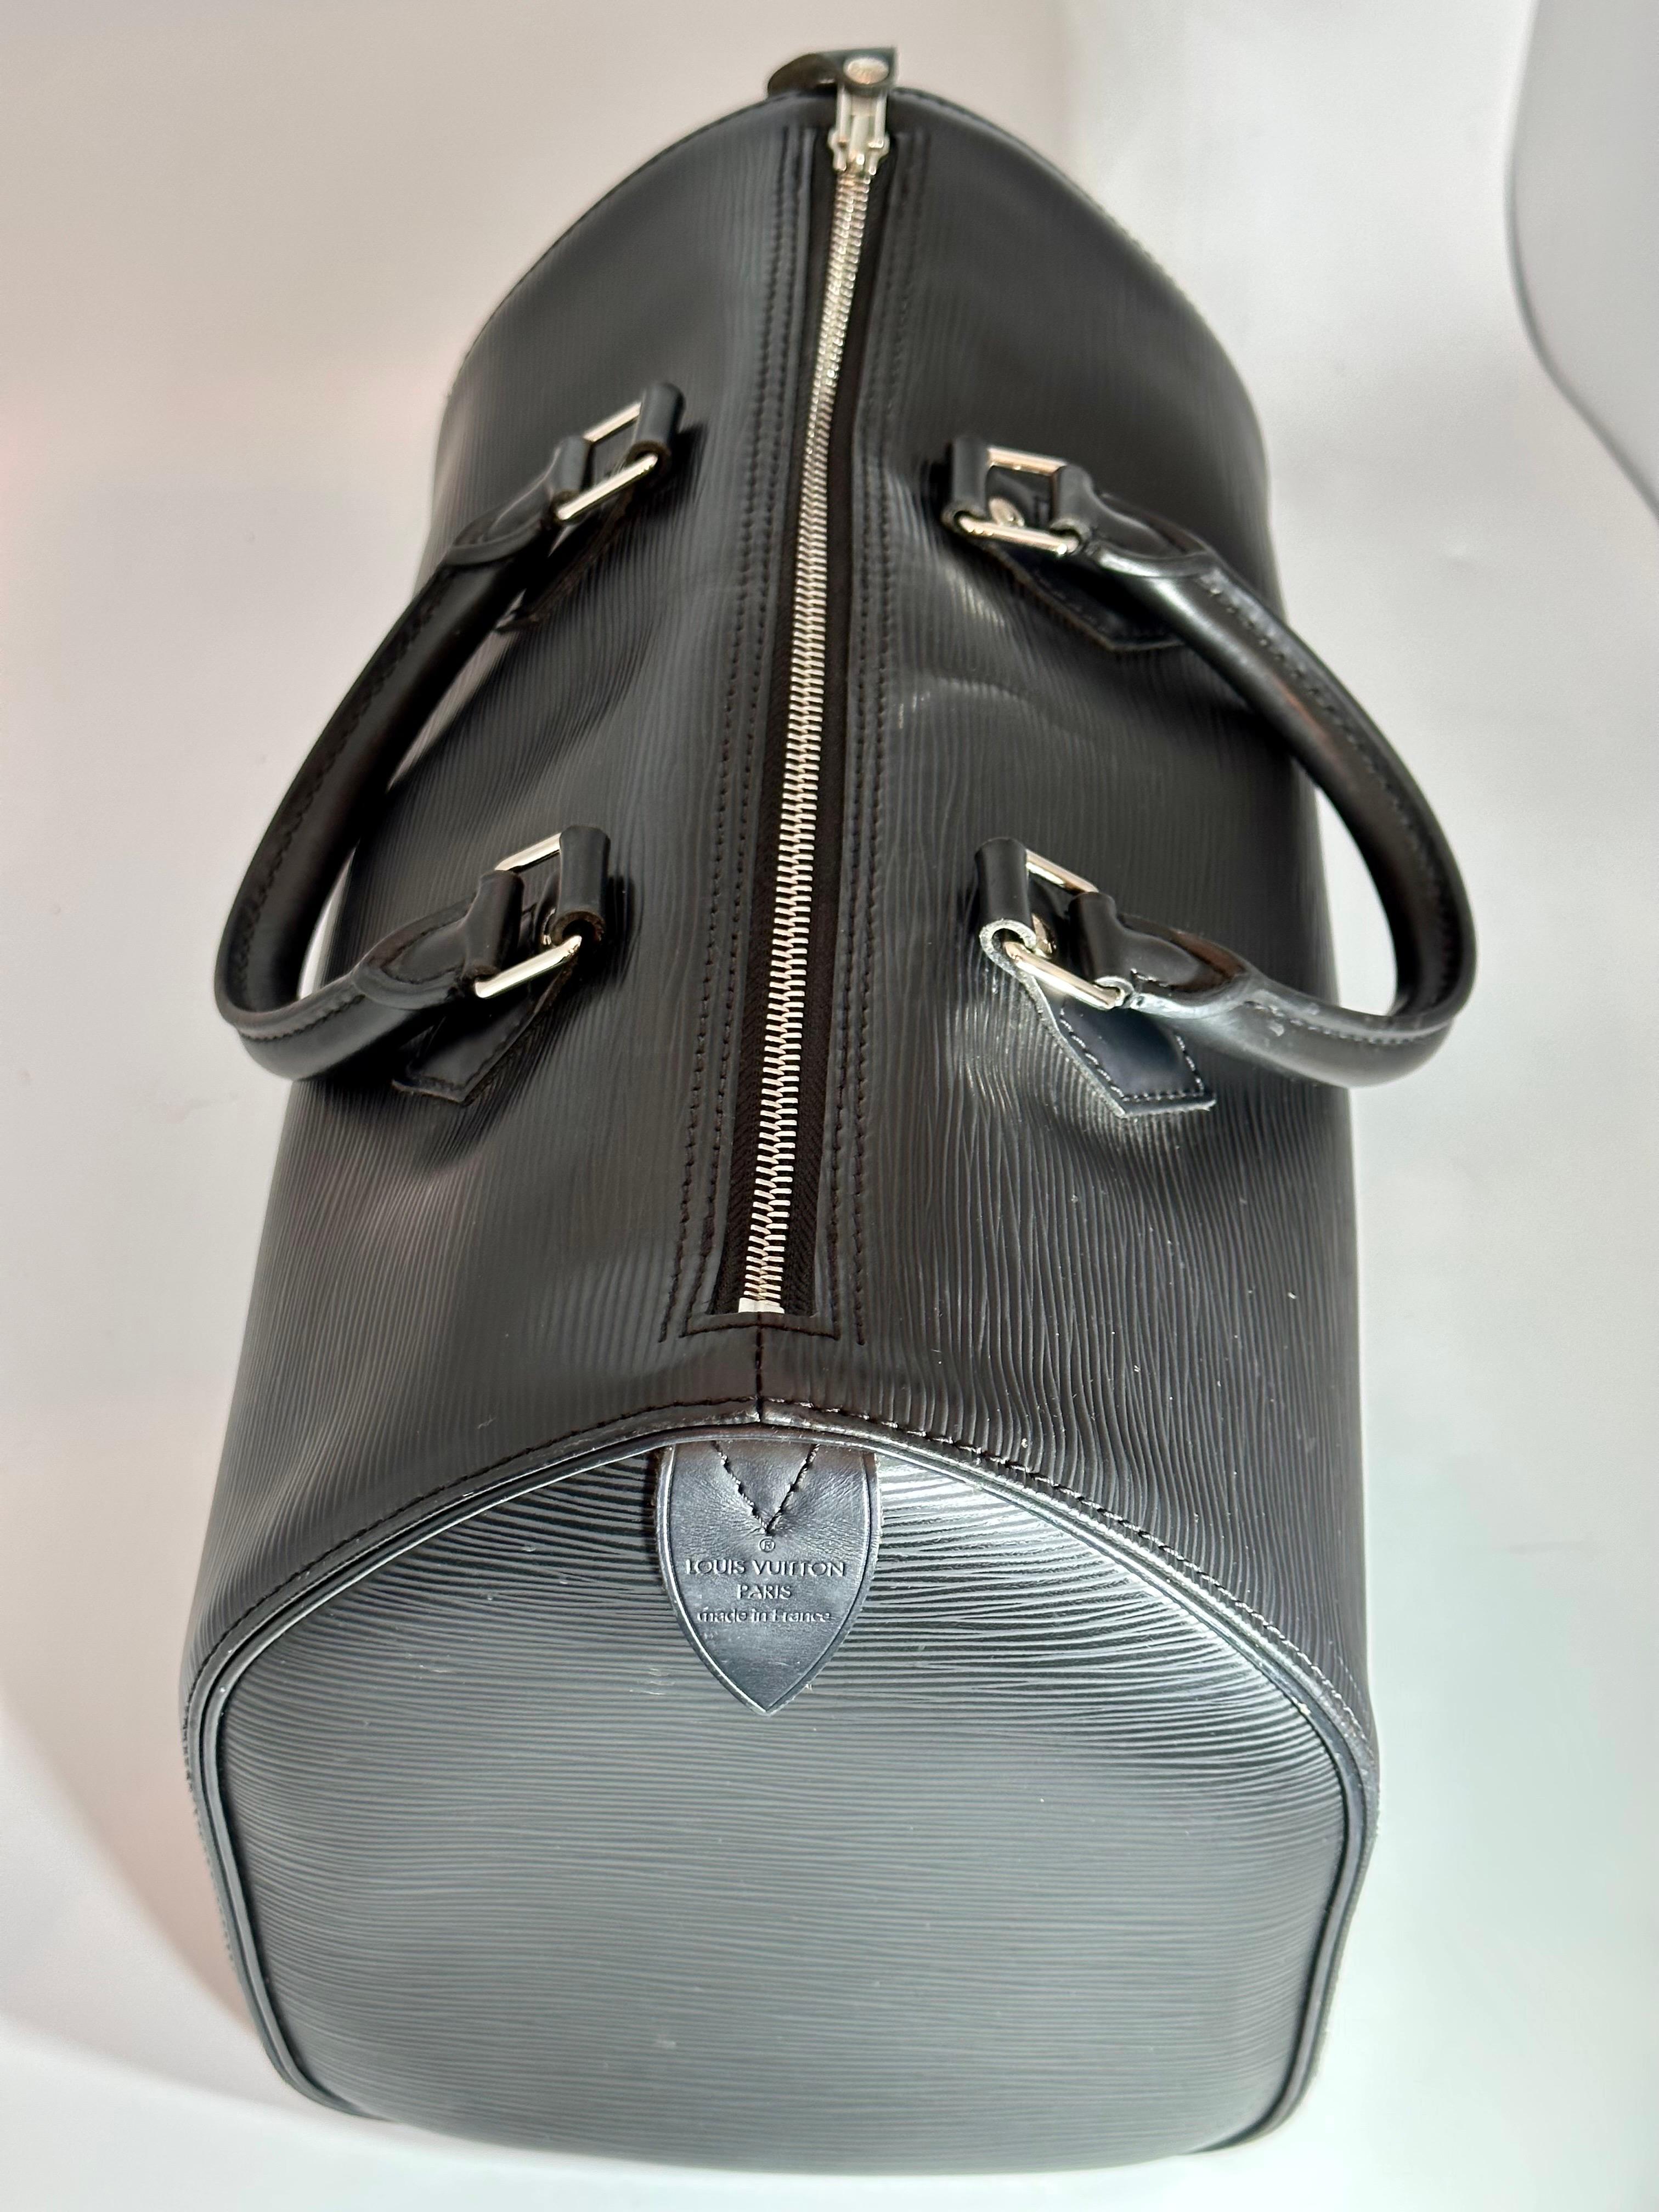 How to spot a fake Louis Vuitton bag, according to Dublin designer expert -  Dublin Live